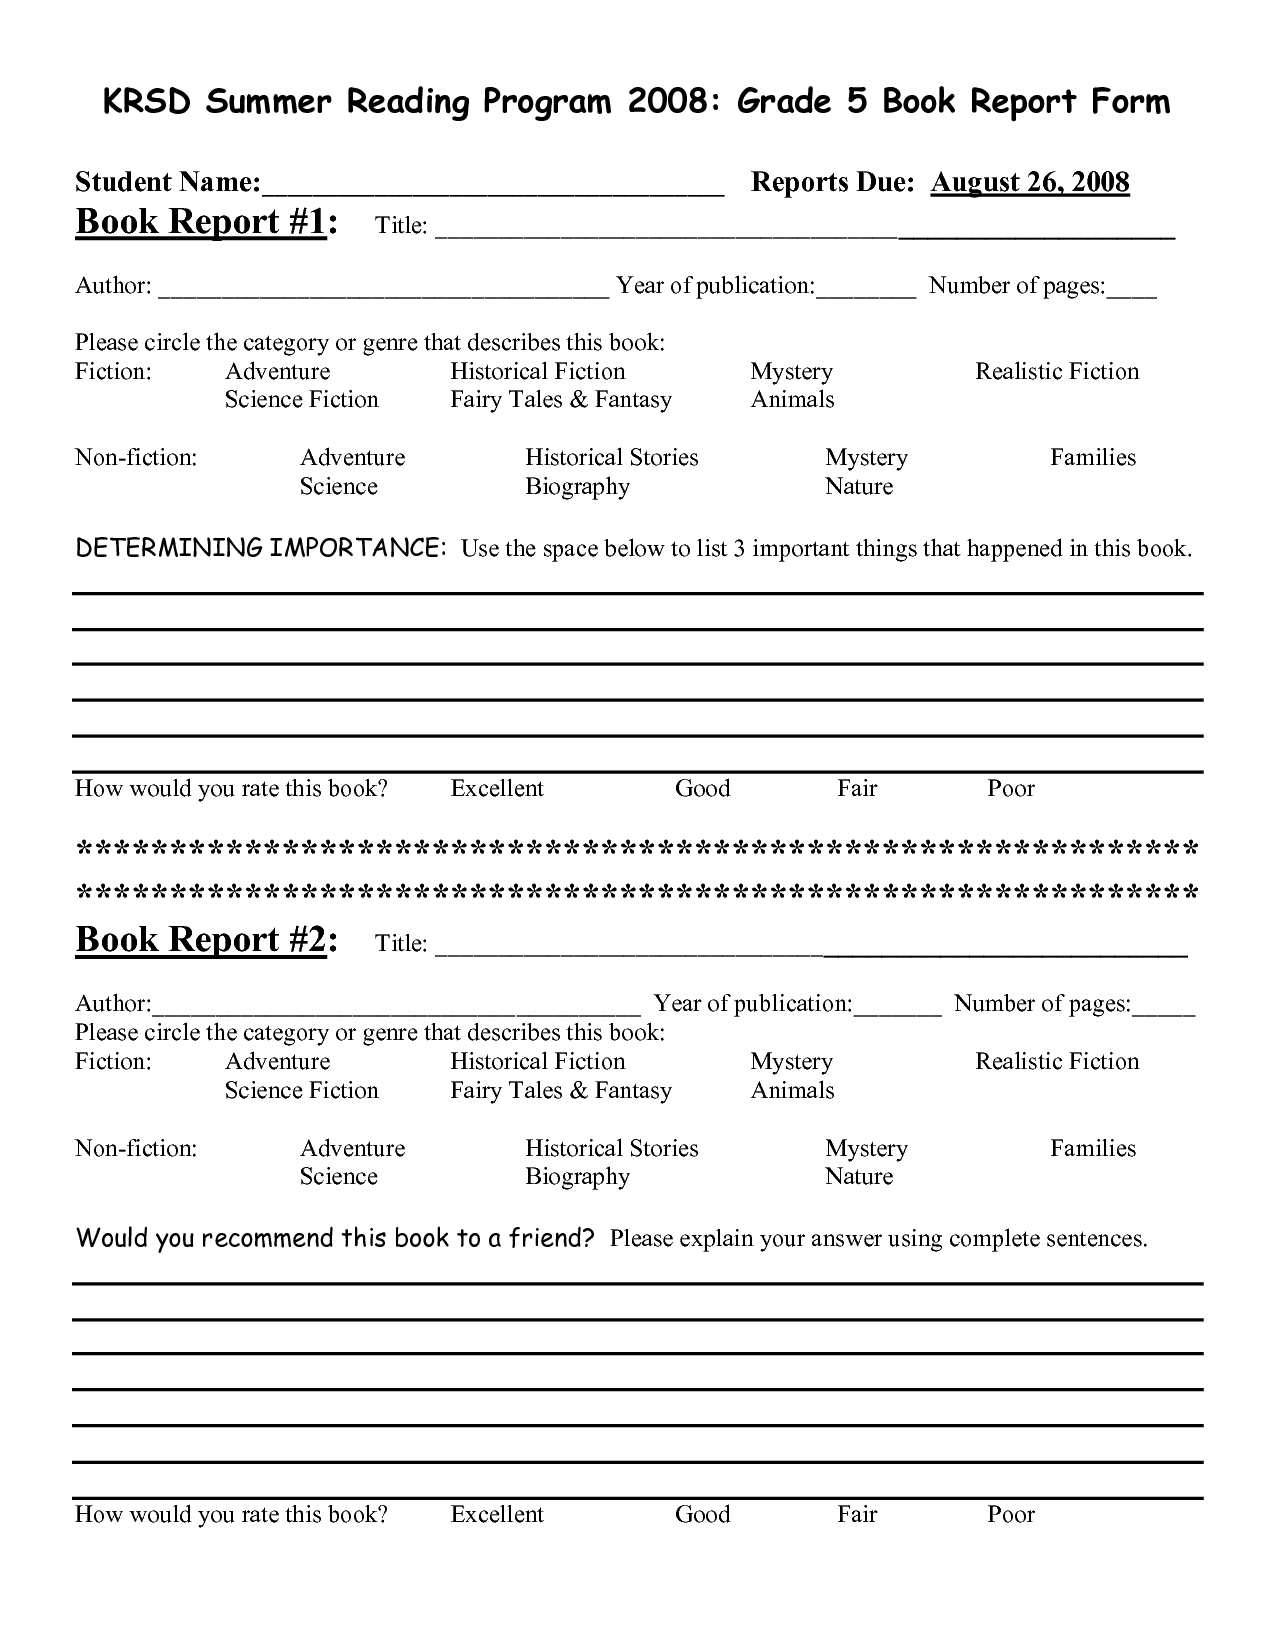 5th Grade Book Report Form Image